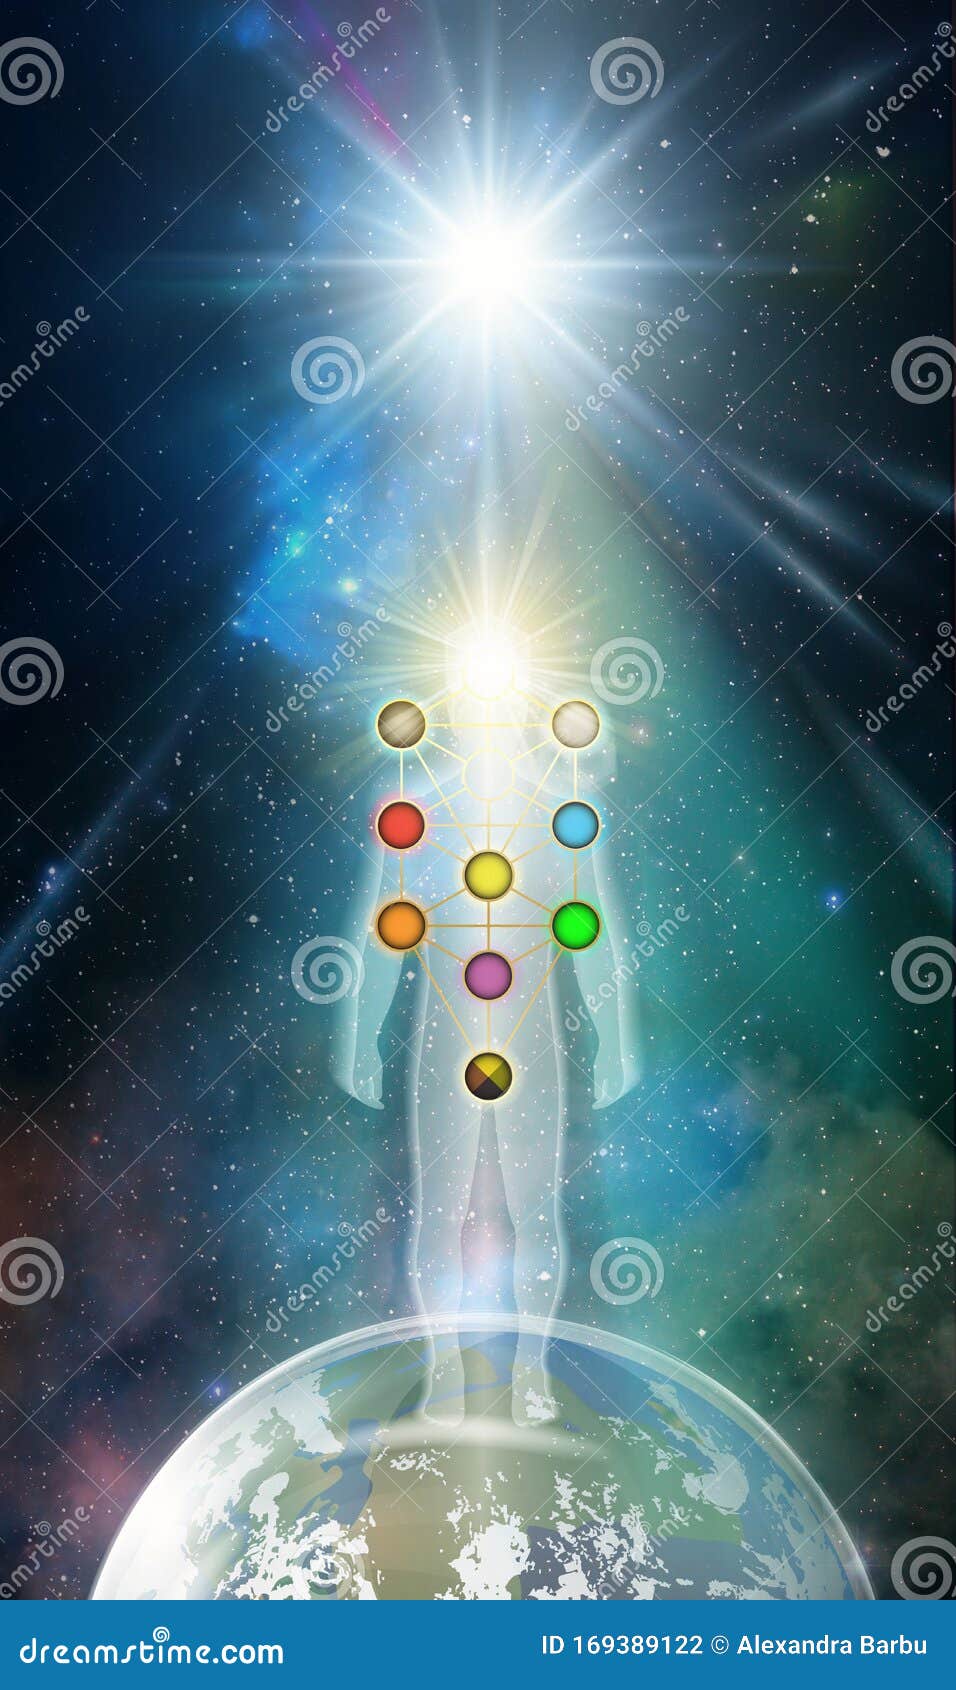 man universe, meditation, healing, human body energy, kabbalah tree of life